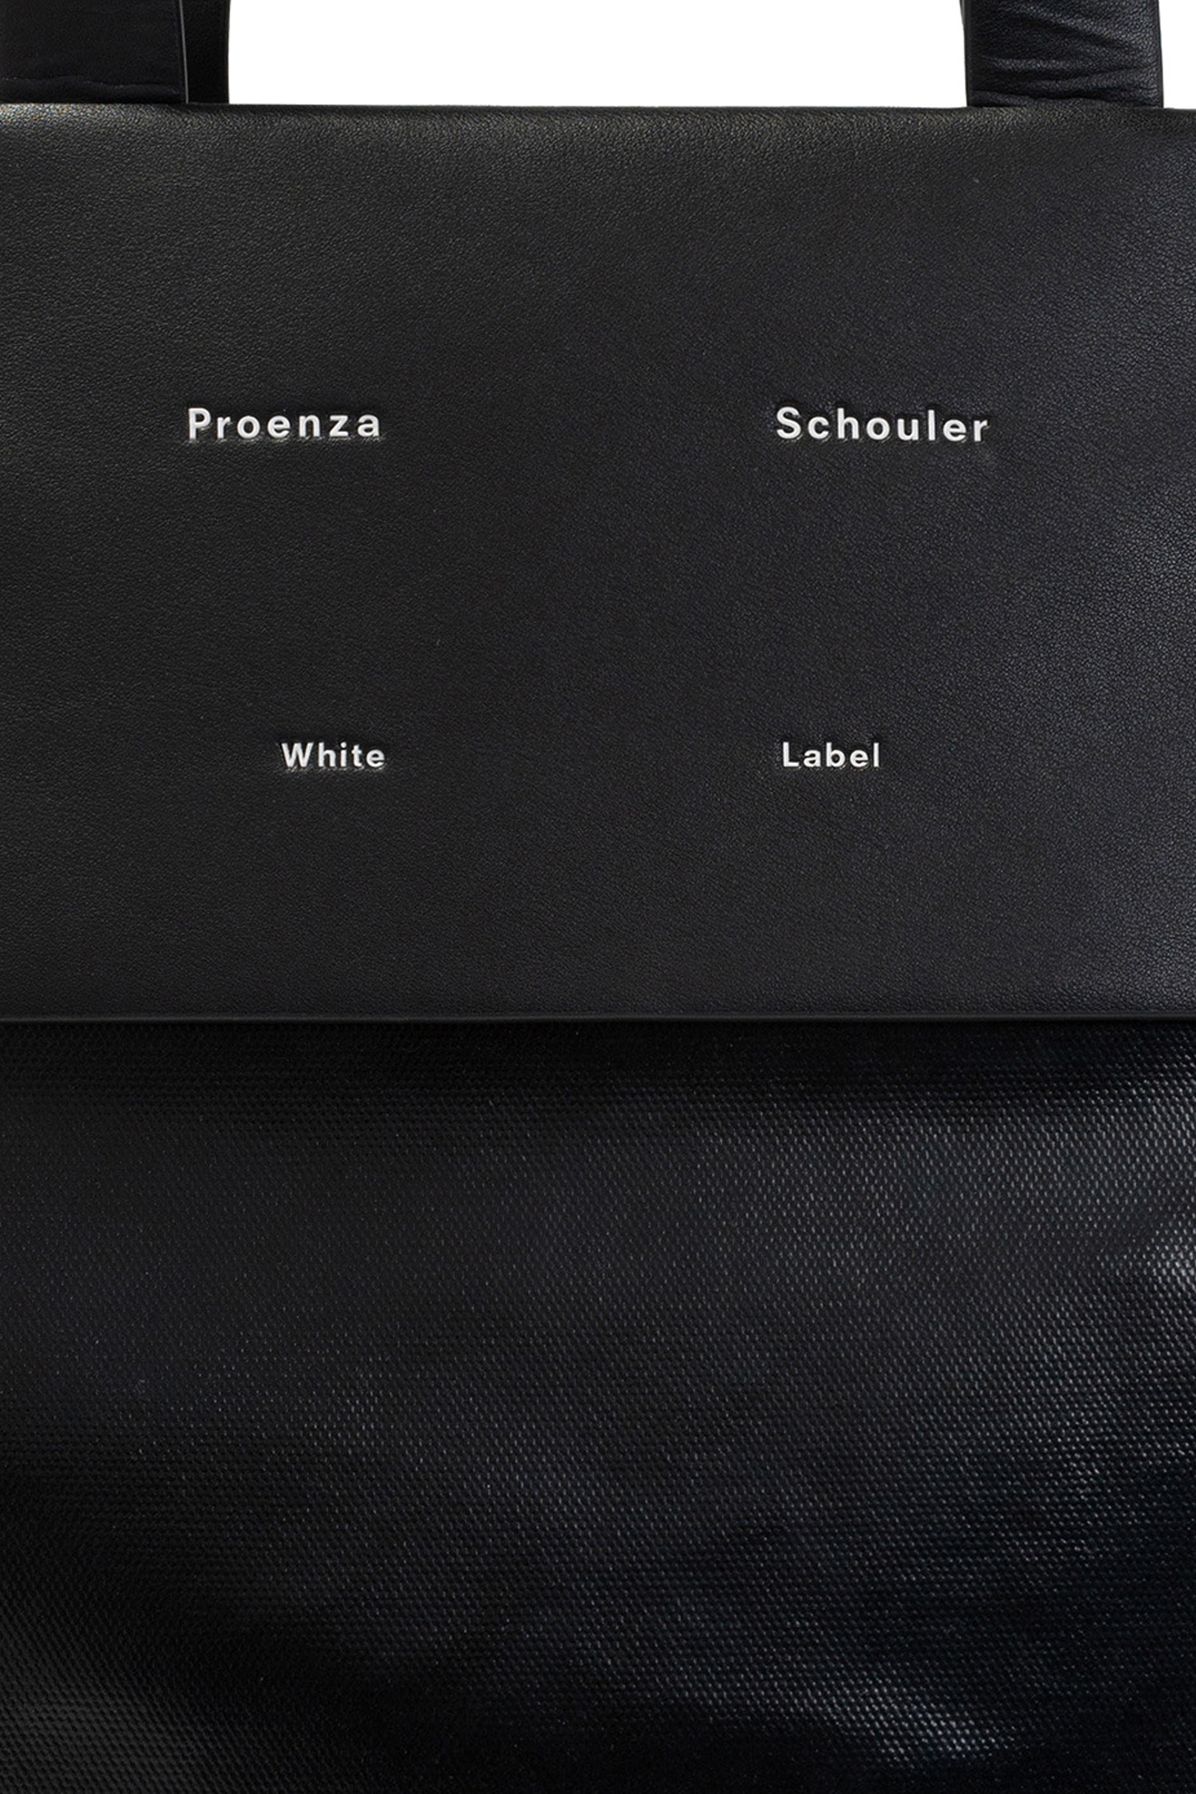 proenza schouler white label Morris XL shopper bag